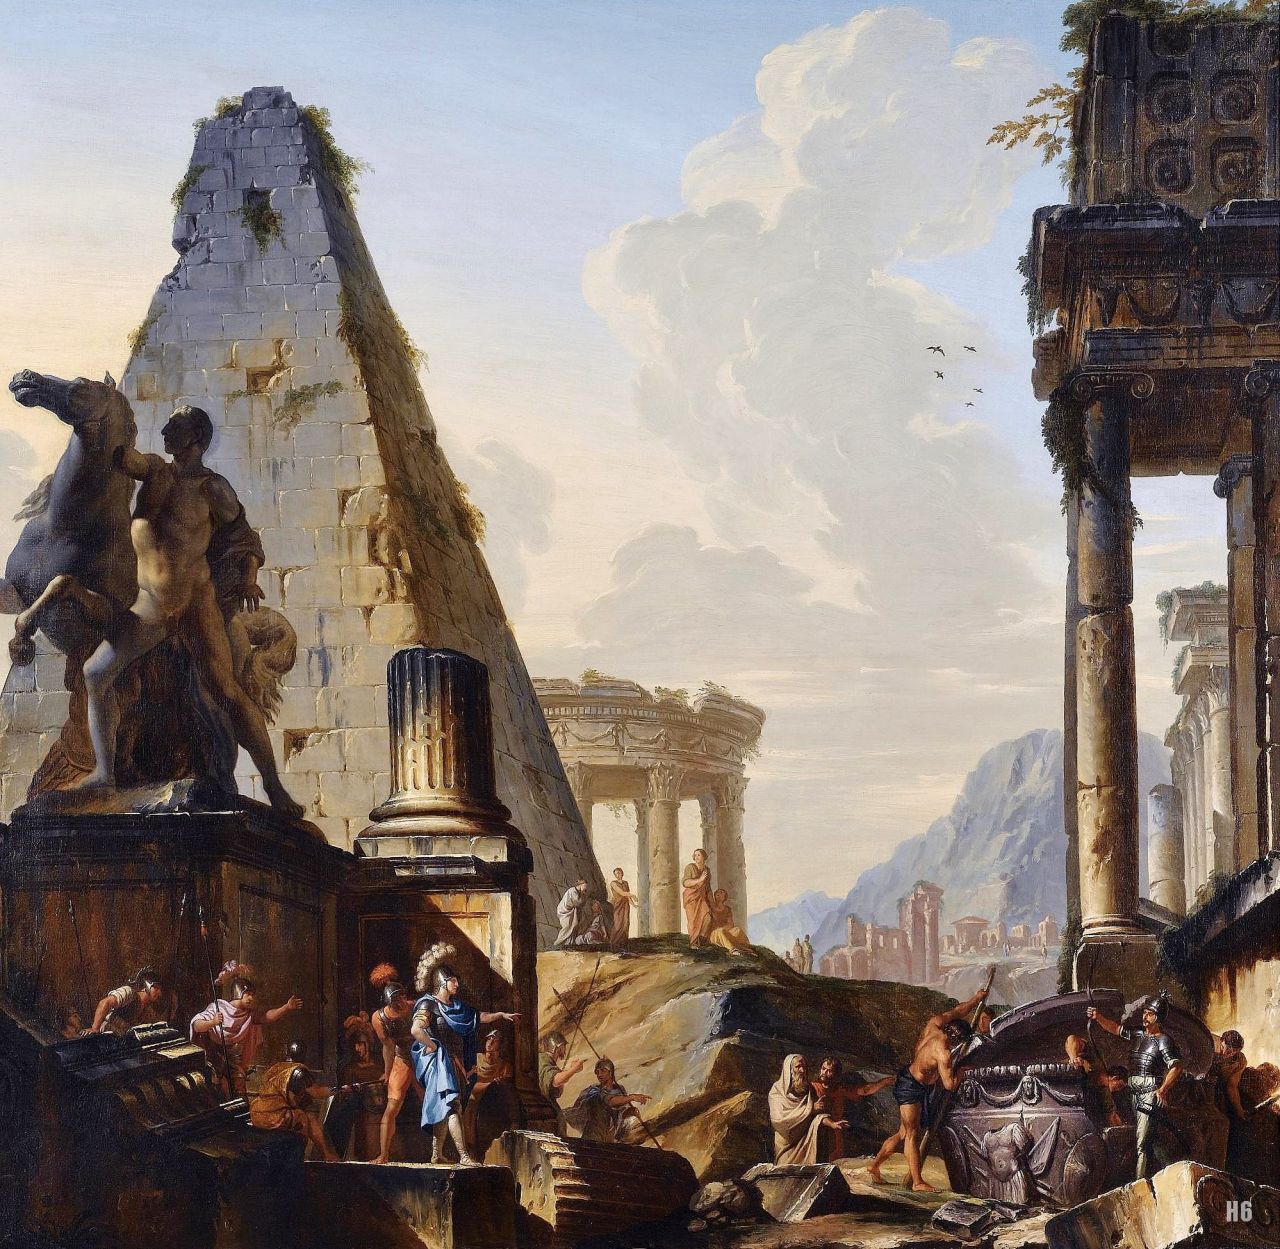 Capriccio of Classical Ruins with Alexander the Great opening the Tomb of Achilles. Giovanni Niccolo Servandoni. Italian 1695-1766. oil/canvas.
http://hadrian6.tumblr.com